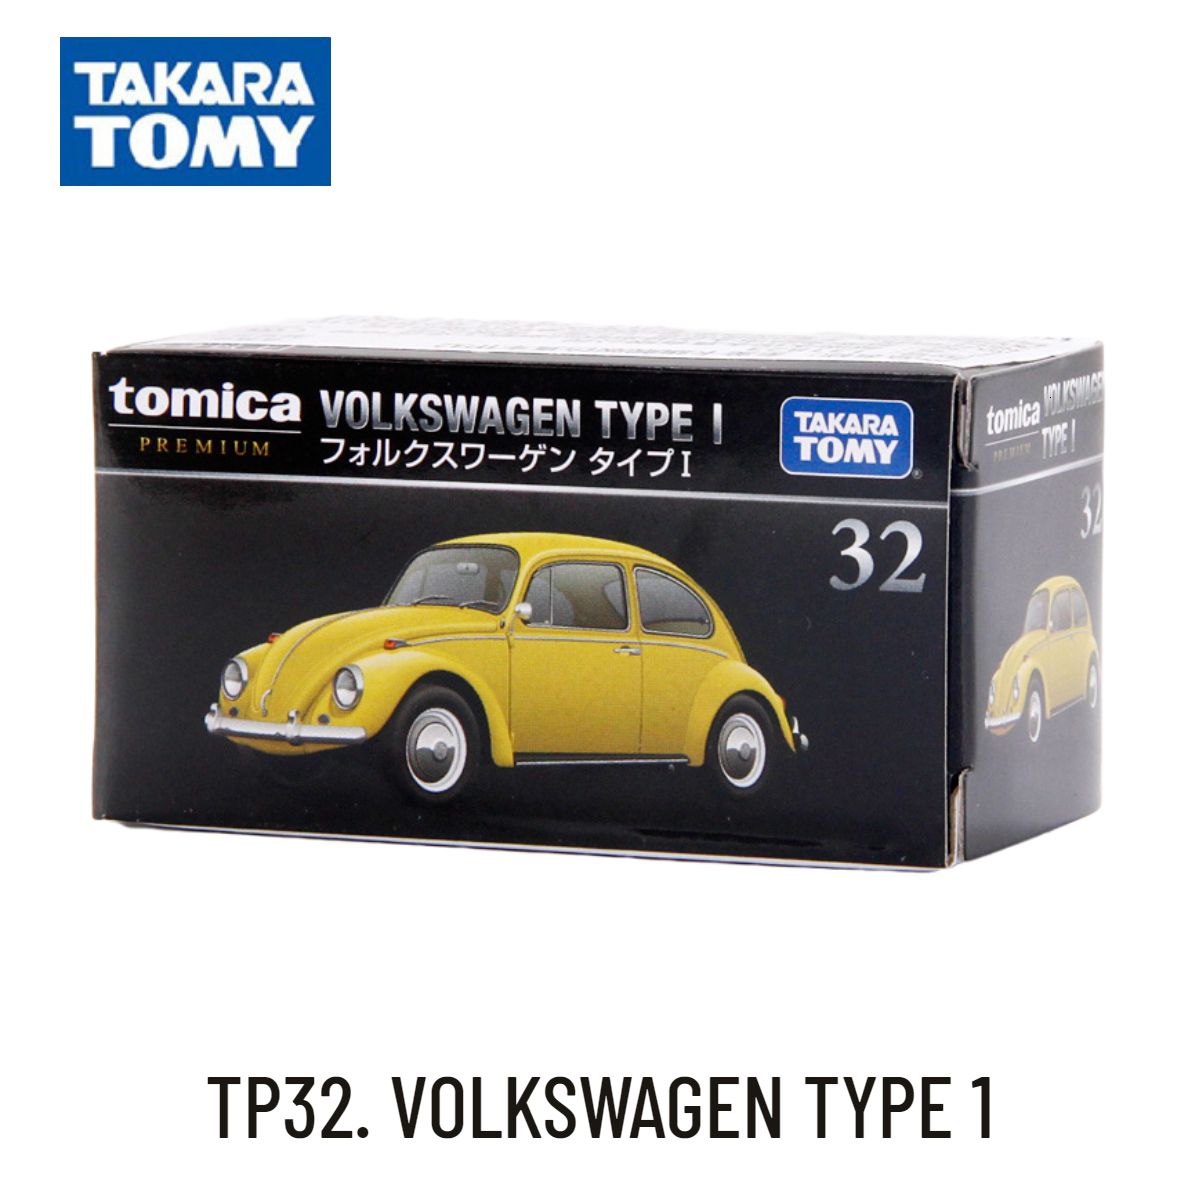 TP32. VW typ 1